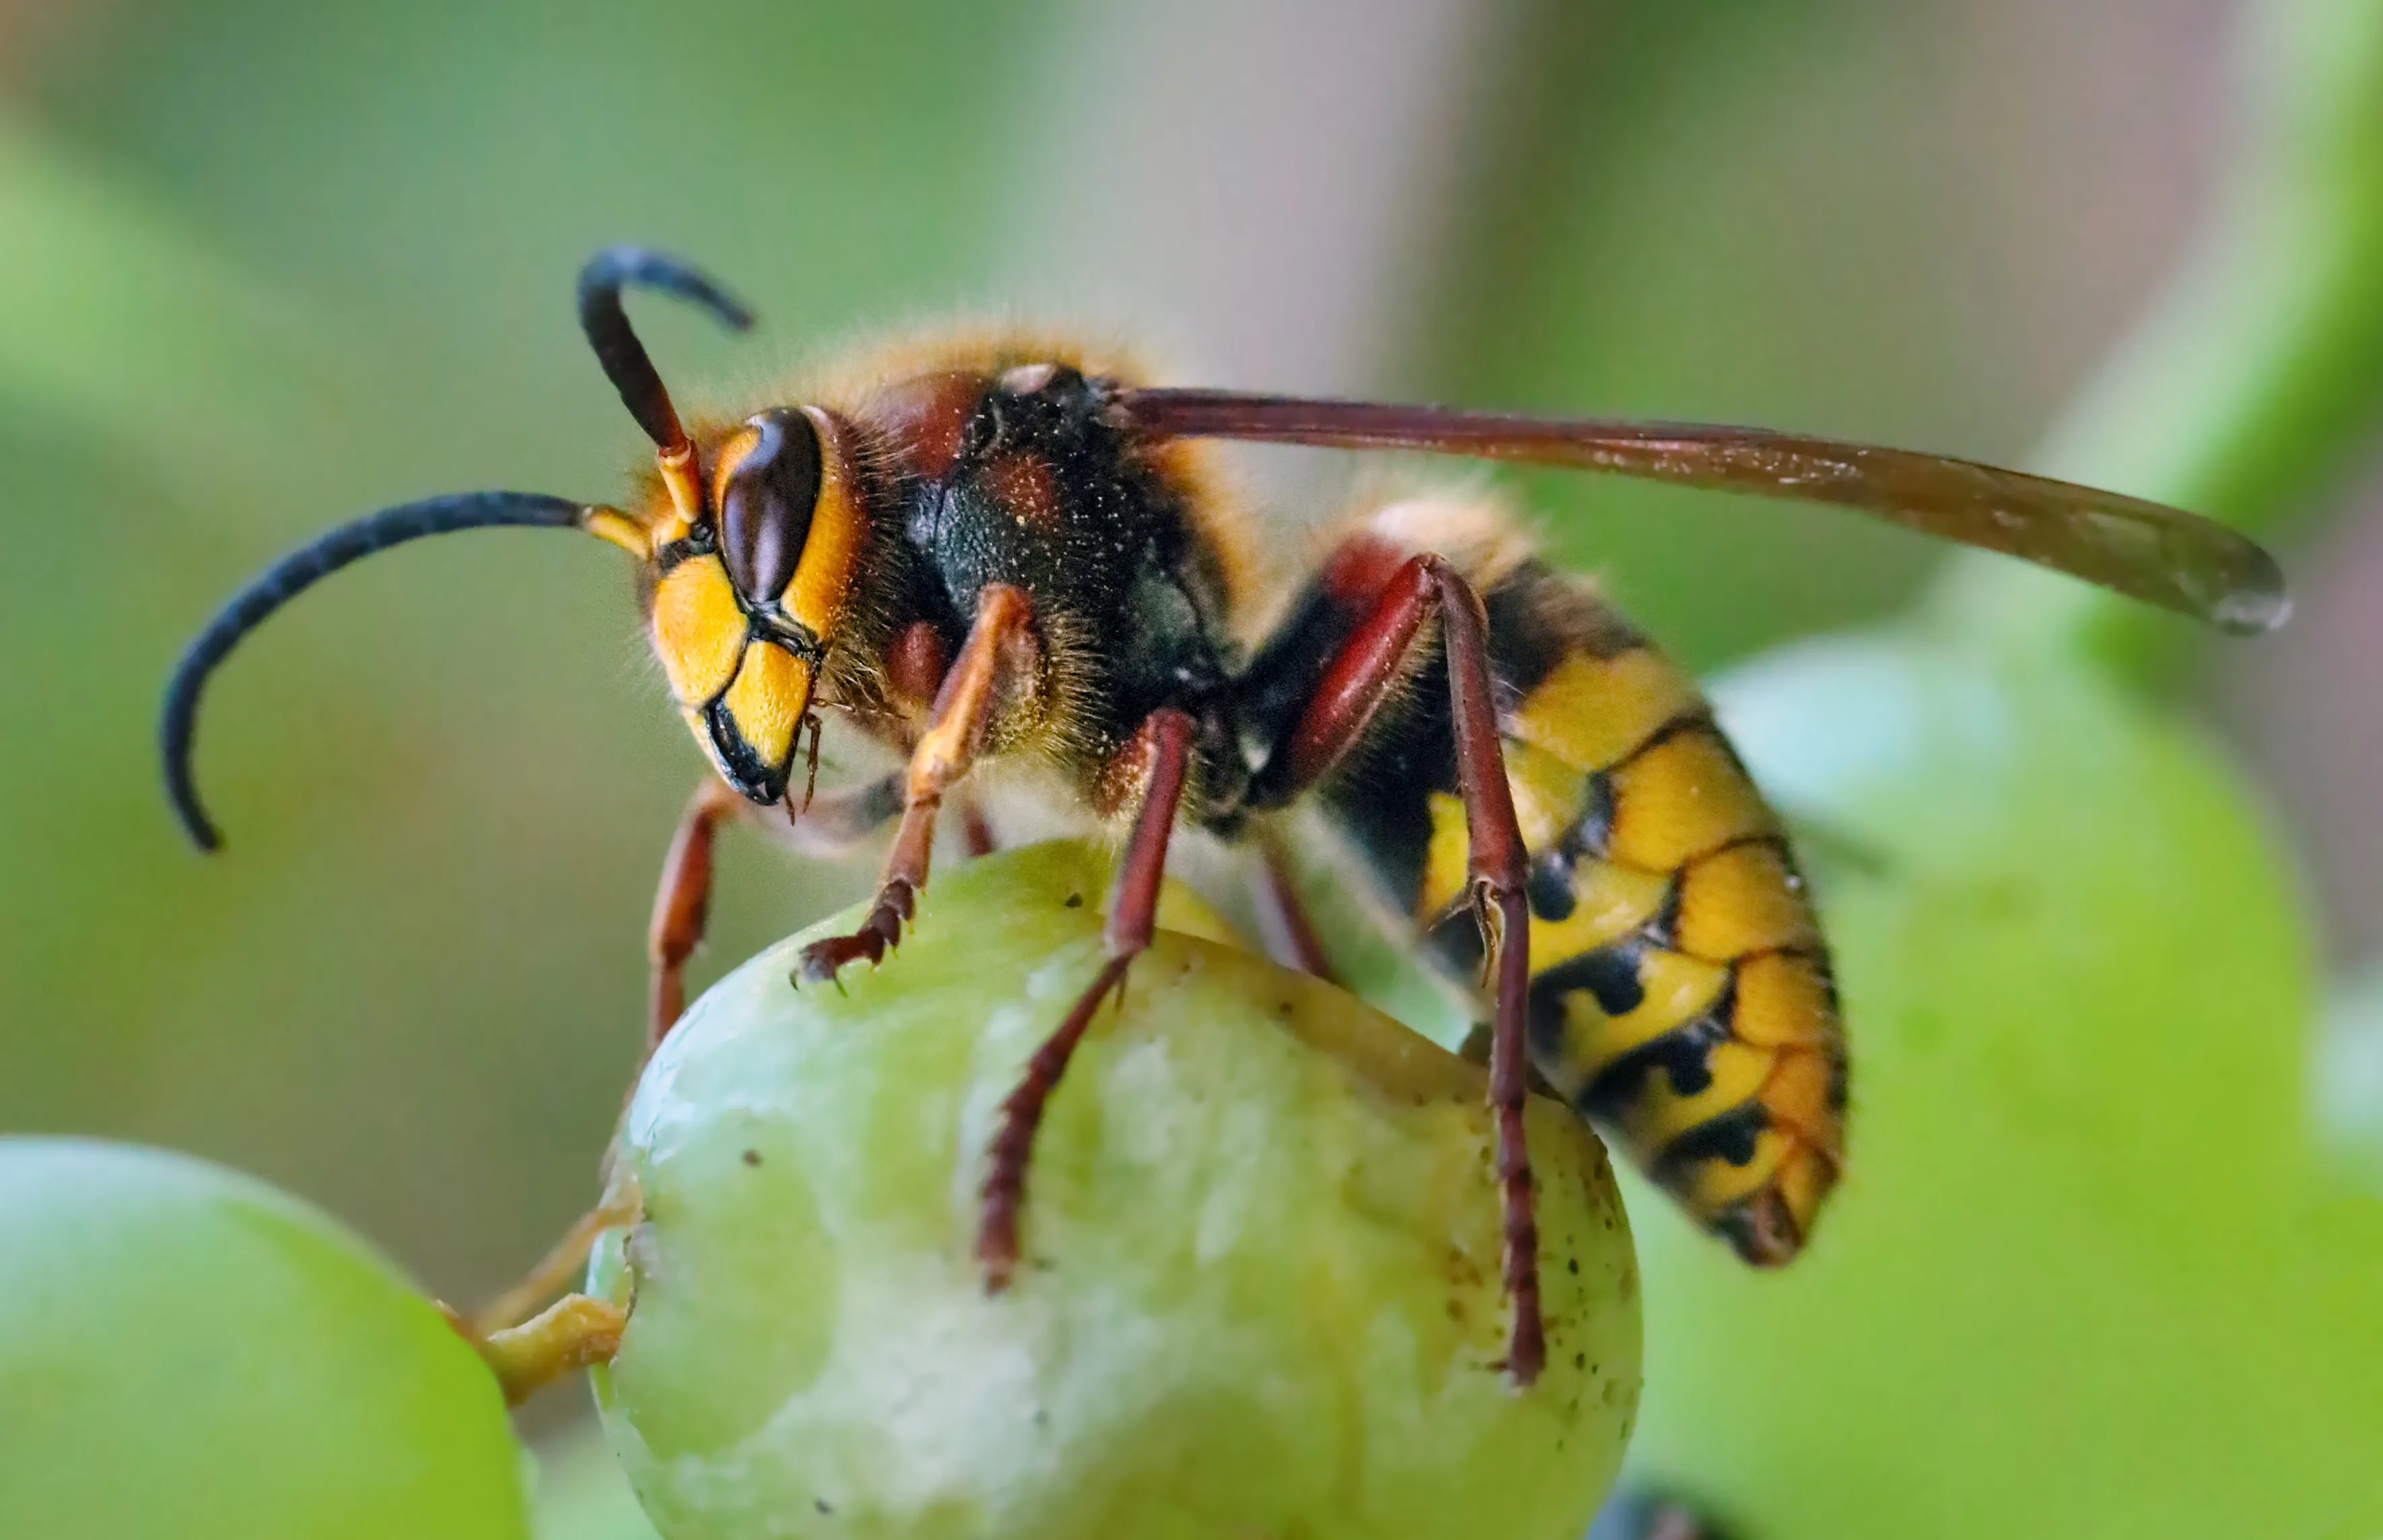 A closeup of a European Hornet eating a grape.